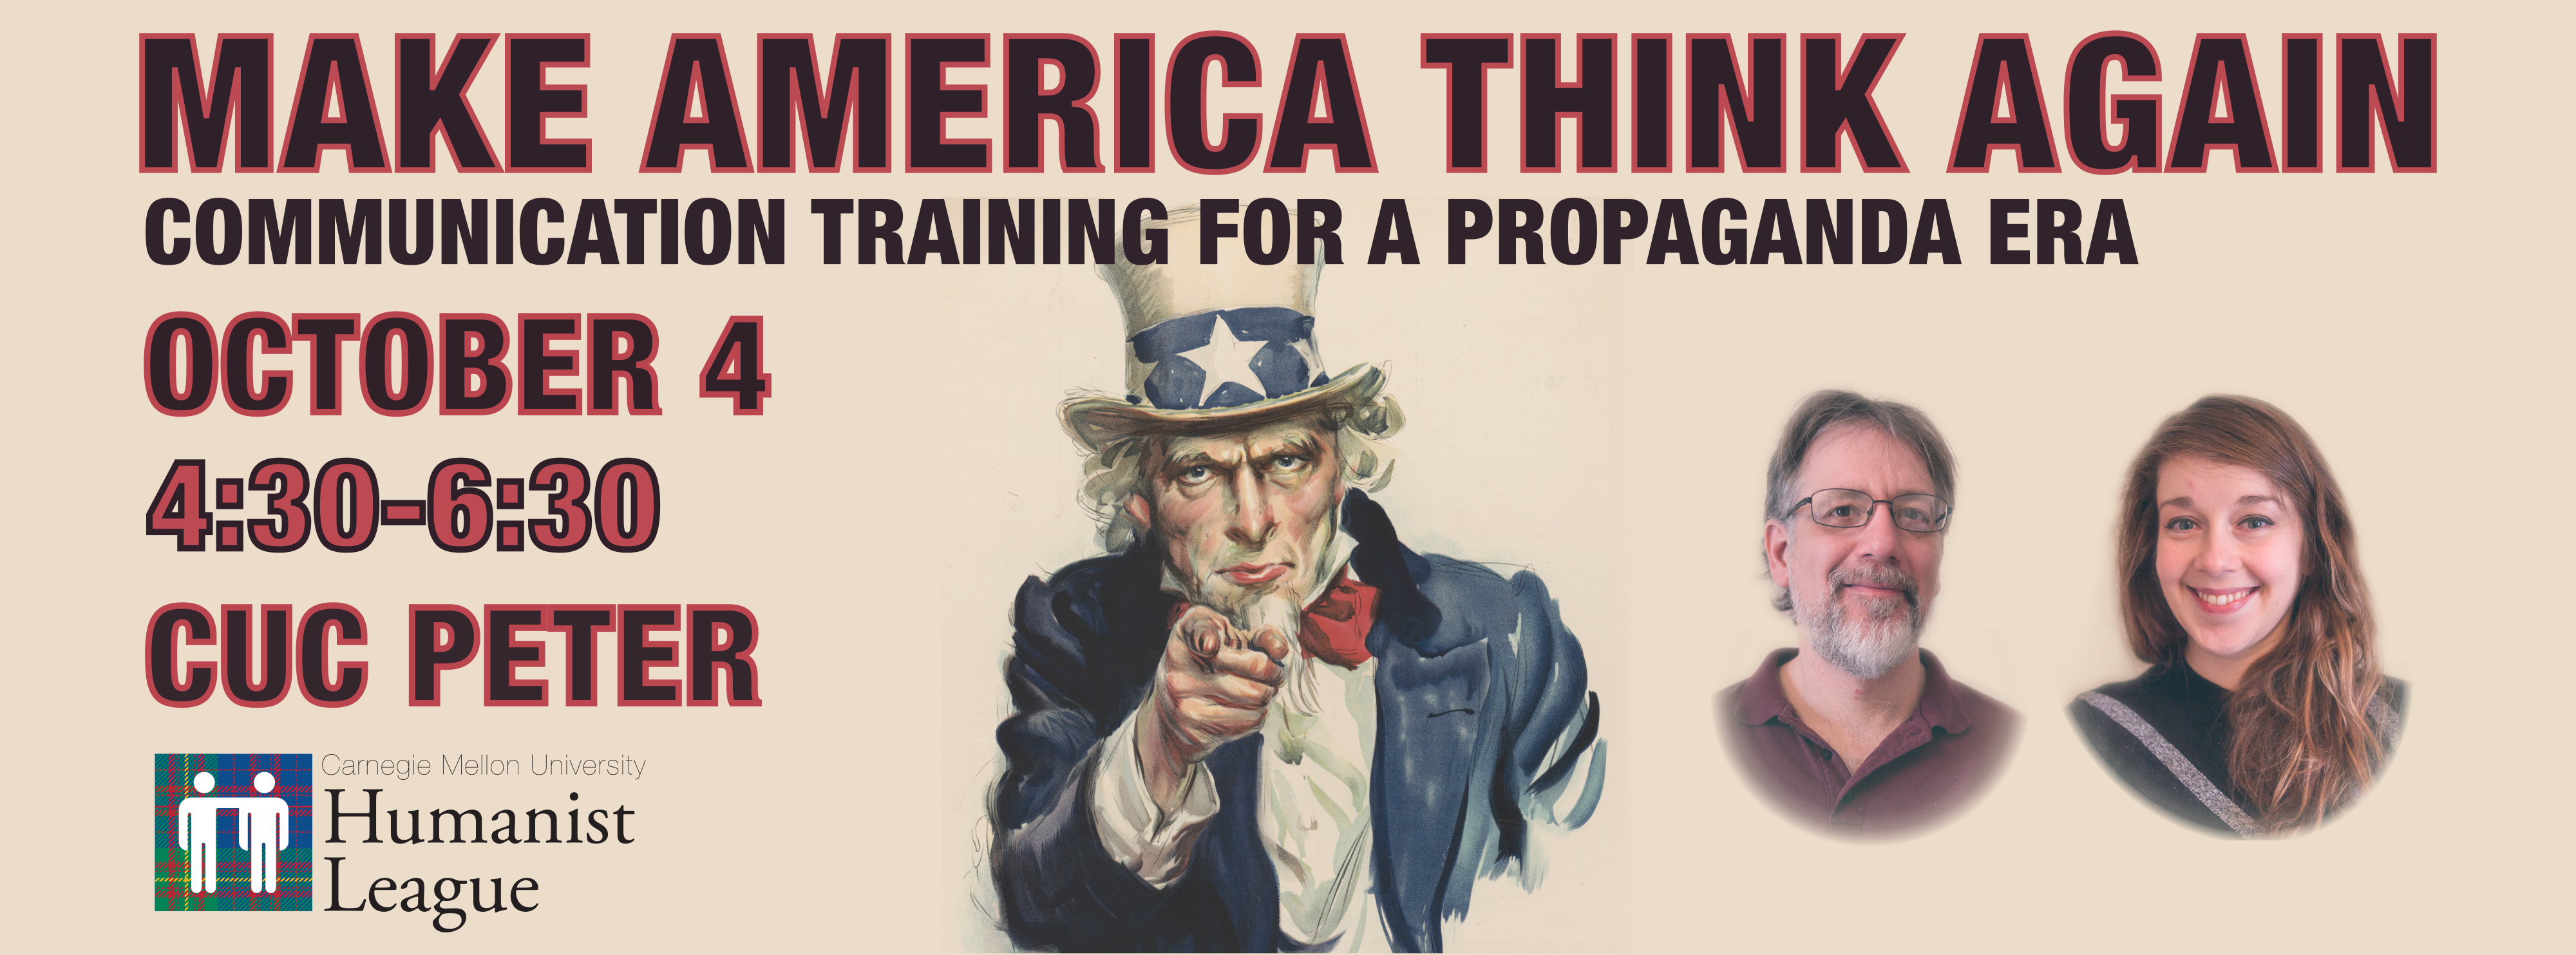 Make America Think Again: Communication Training for a Propaganda Era Banner